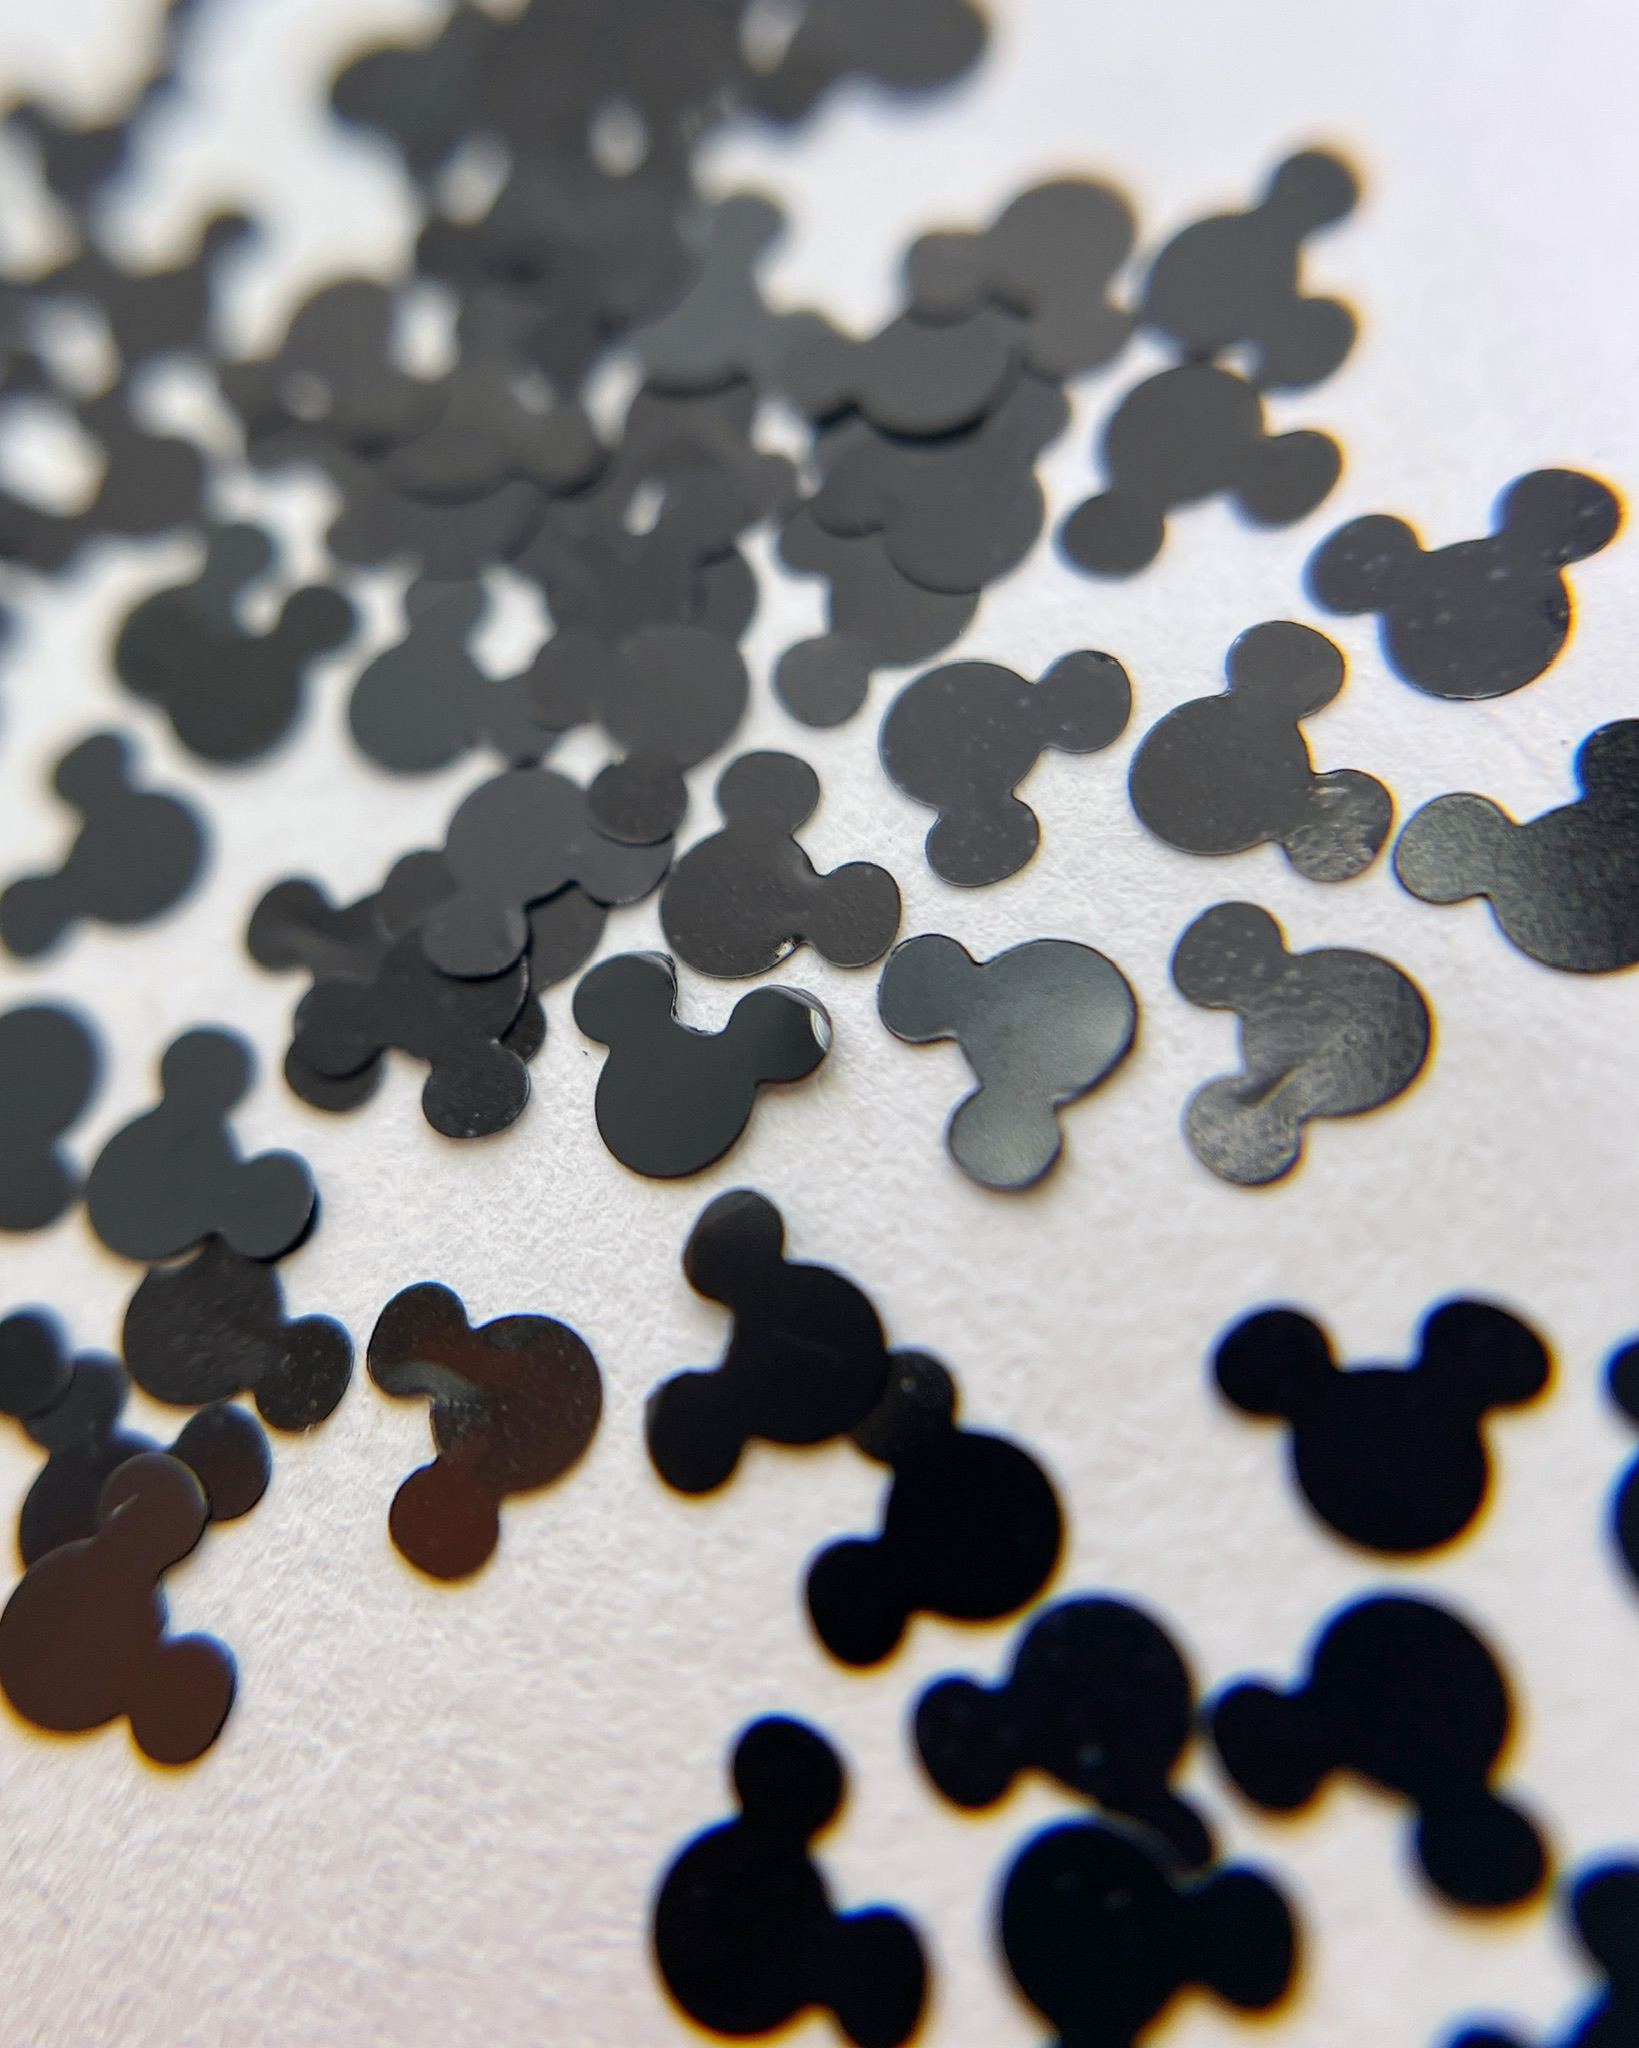 Black mouse sha[ed glitter scattered on a white background. 